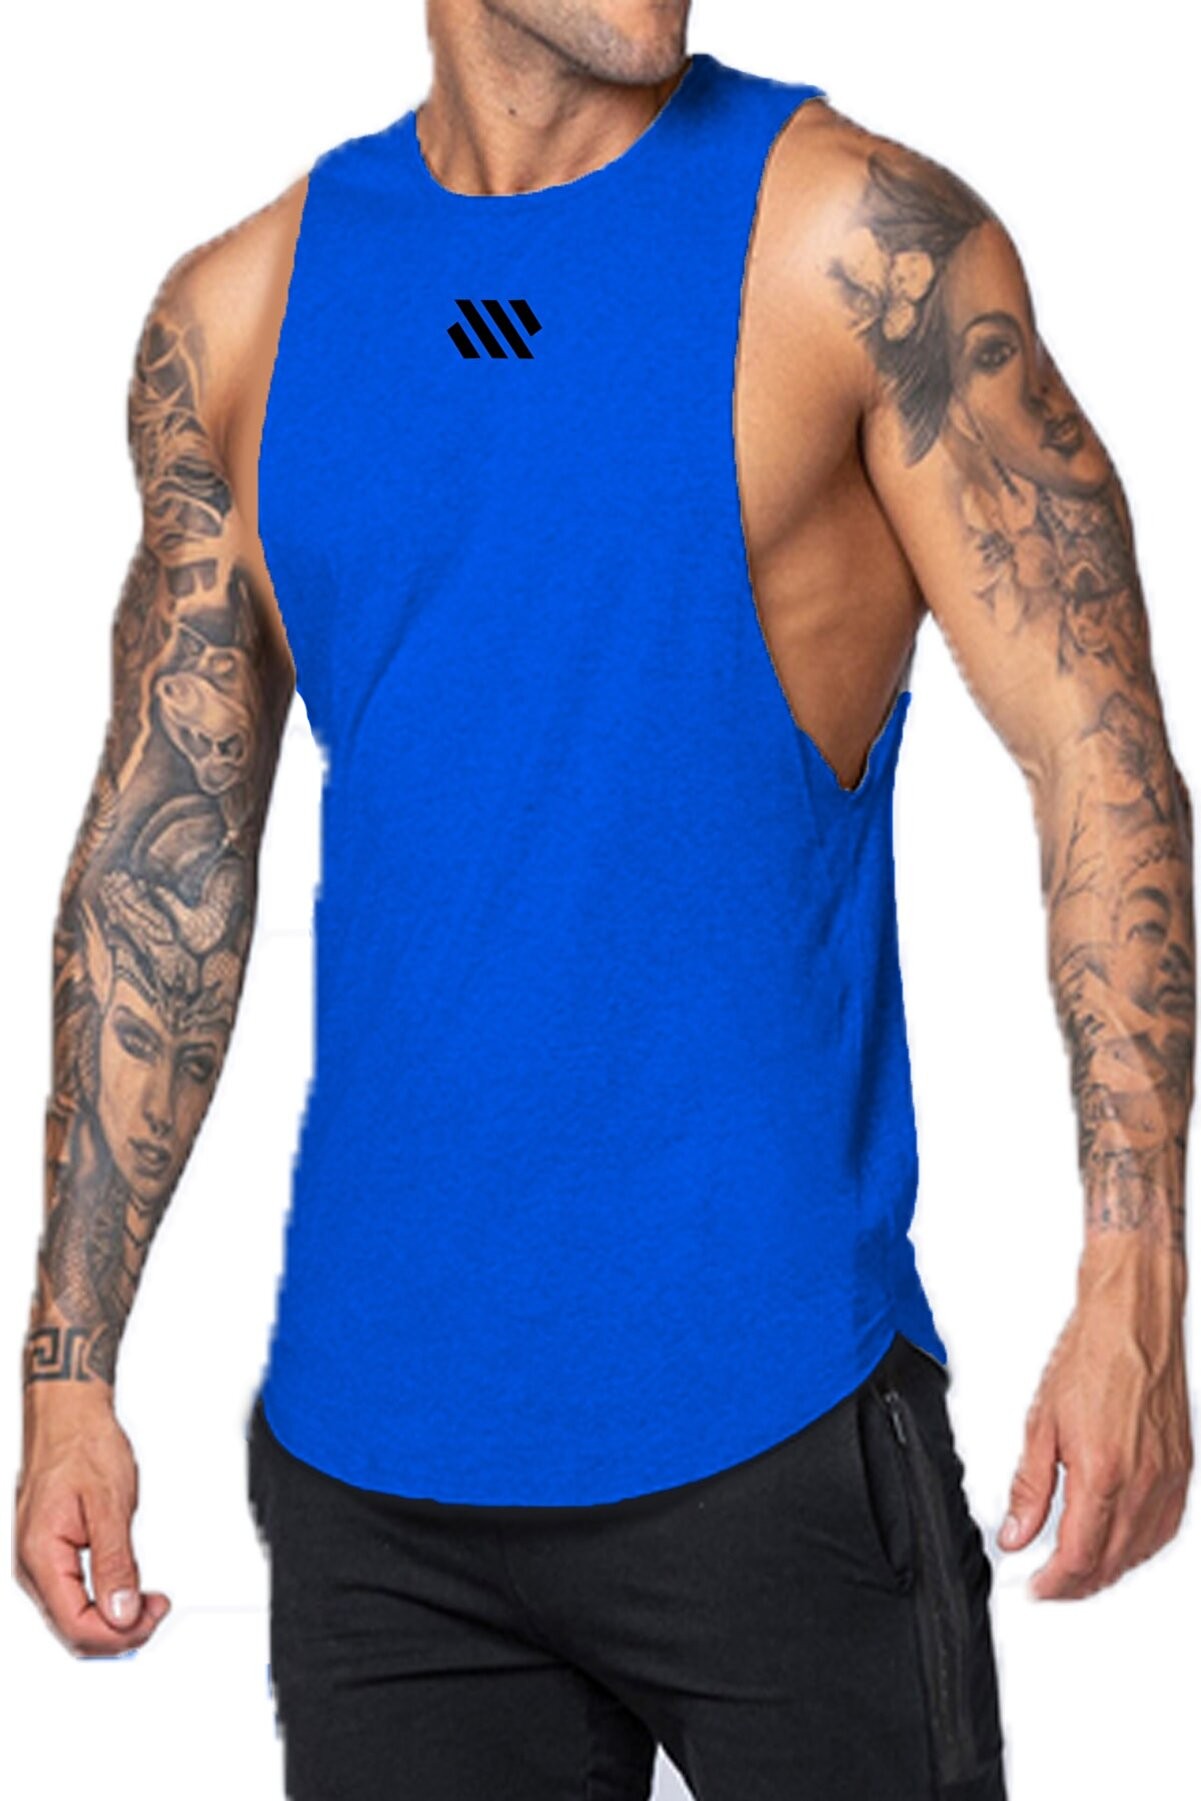 Ghassy Co. Erkek Dry Fit Gym Workout Stringer Fitness Spor Atlet Tshirt GYM-105 - İNDİGO